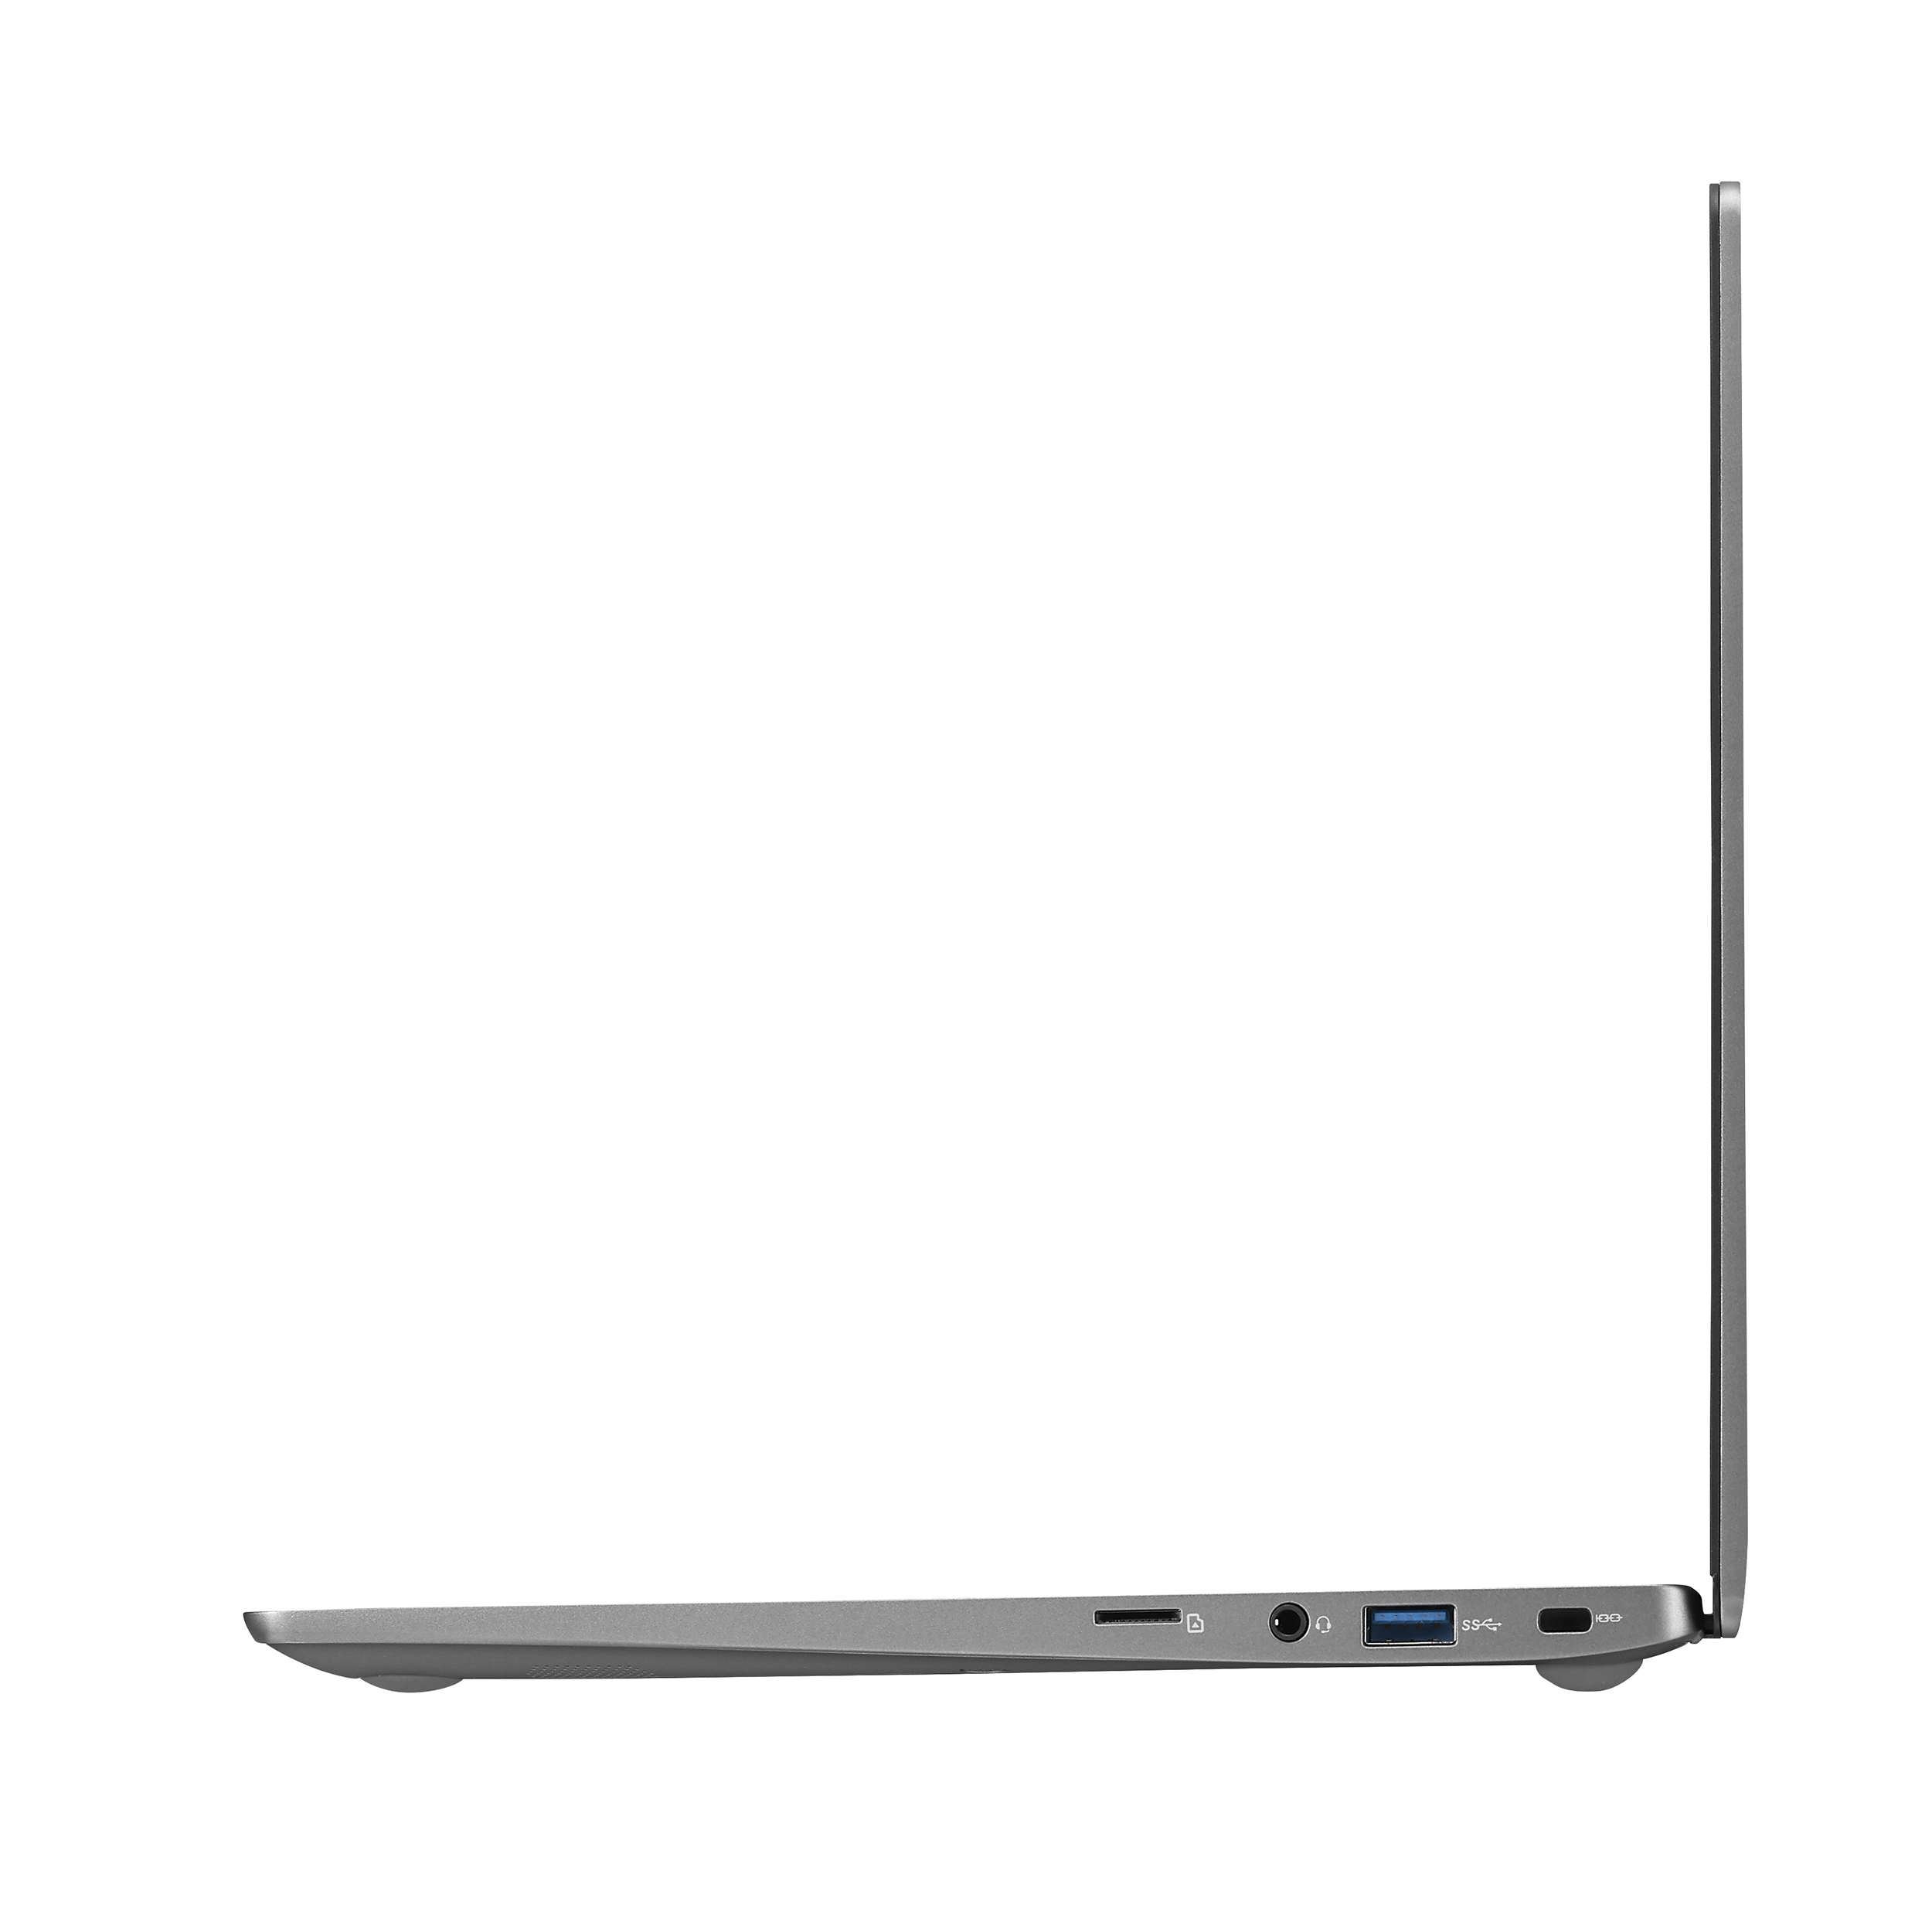 LG gram 14 inch Ultra-Lightweight Laptop with 10th Gen Intel Core Processor w/Intel Iris Plus - 14Z90N-U.AAS7U1 - image 2 of 13